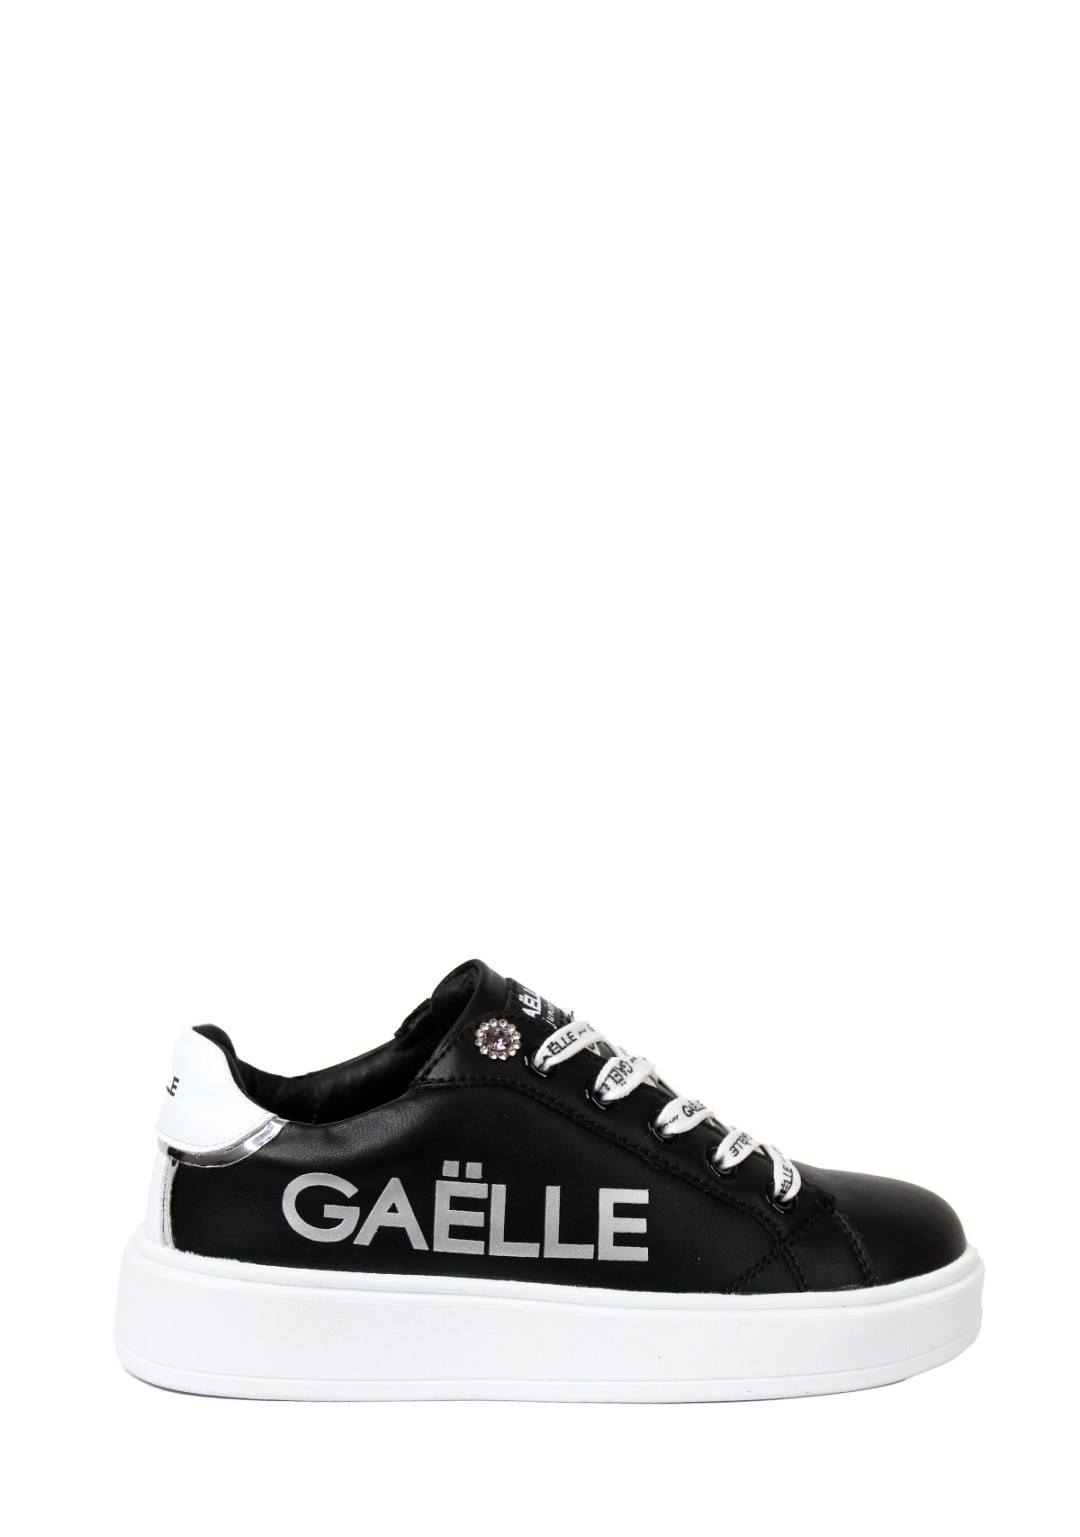 GAëLLE PARIS - Sneaker Scritta - Bambine e ragazze - GS0006L Chloe N